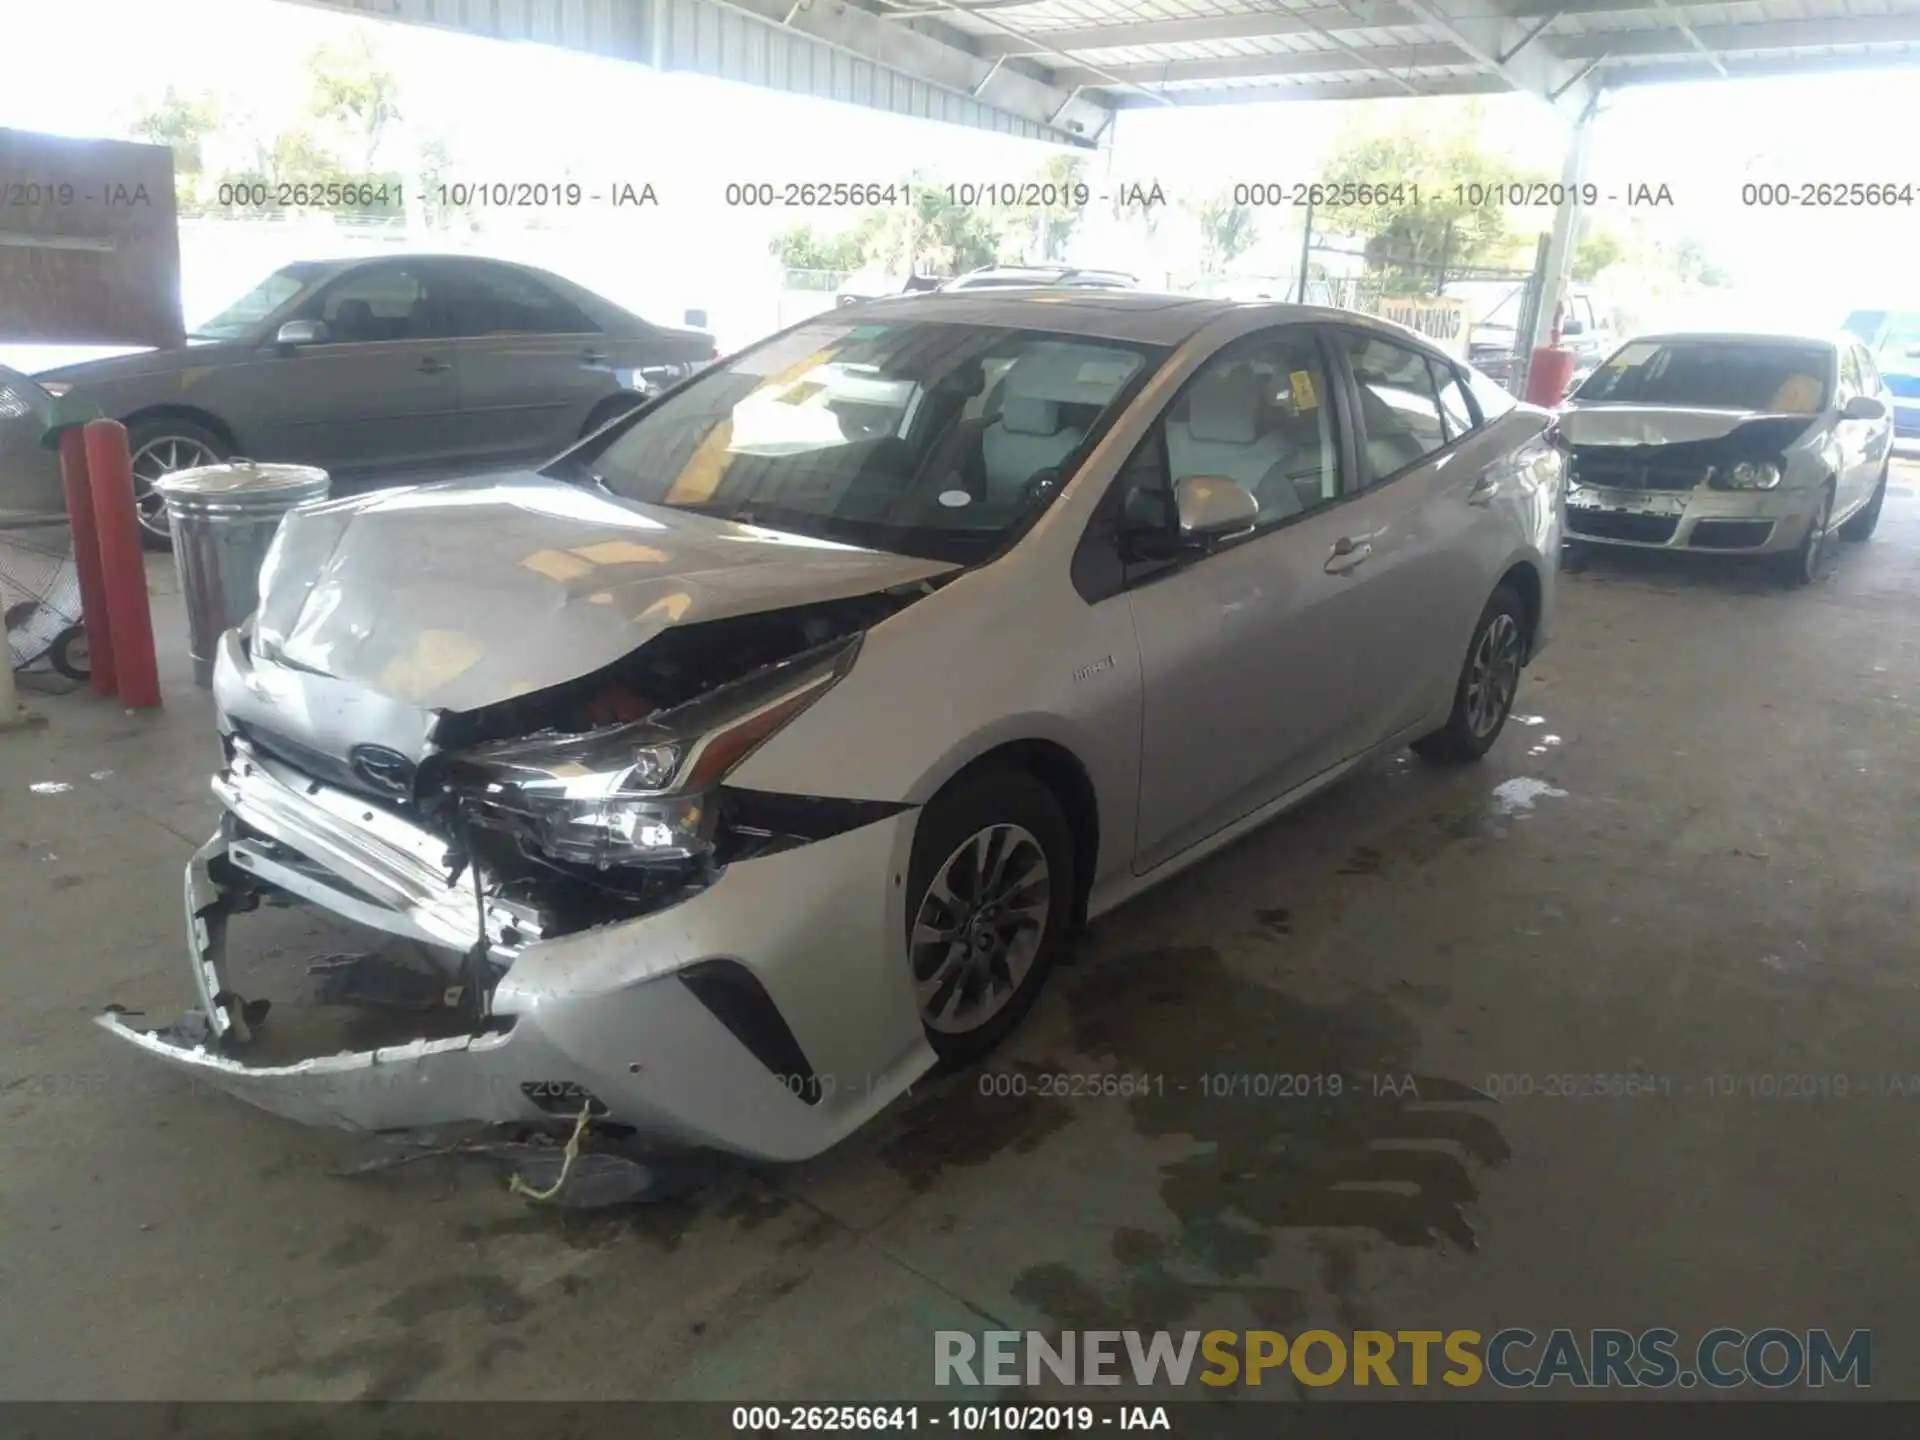 2 Photograph of a damaged car JTDKARFU2K3070167 TOYOTA PRIUS 2019